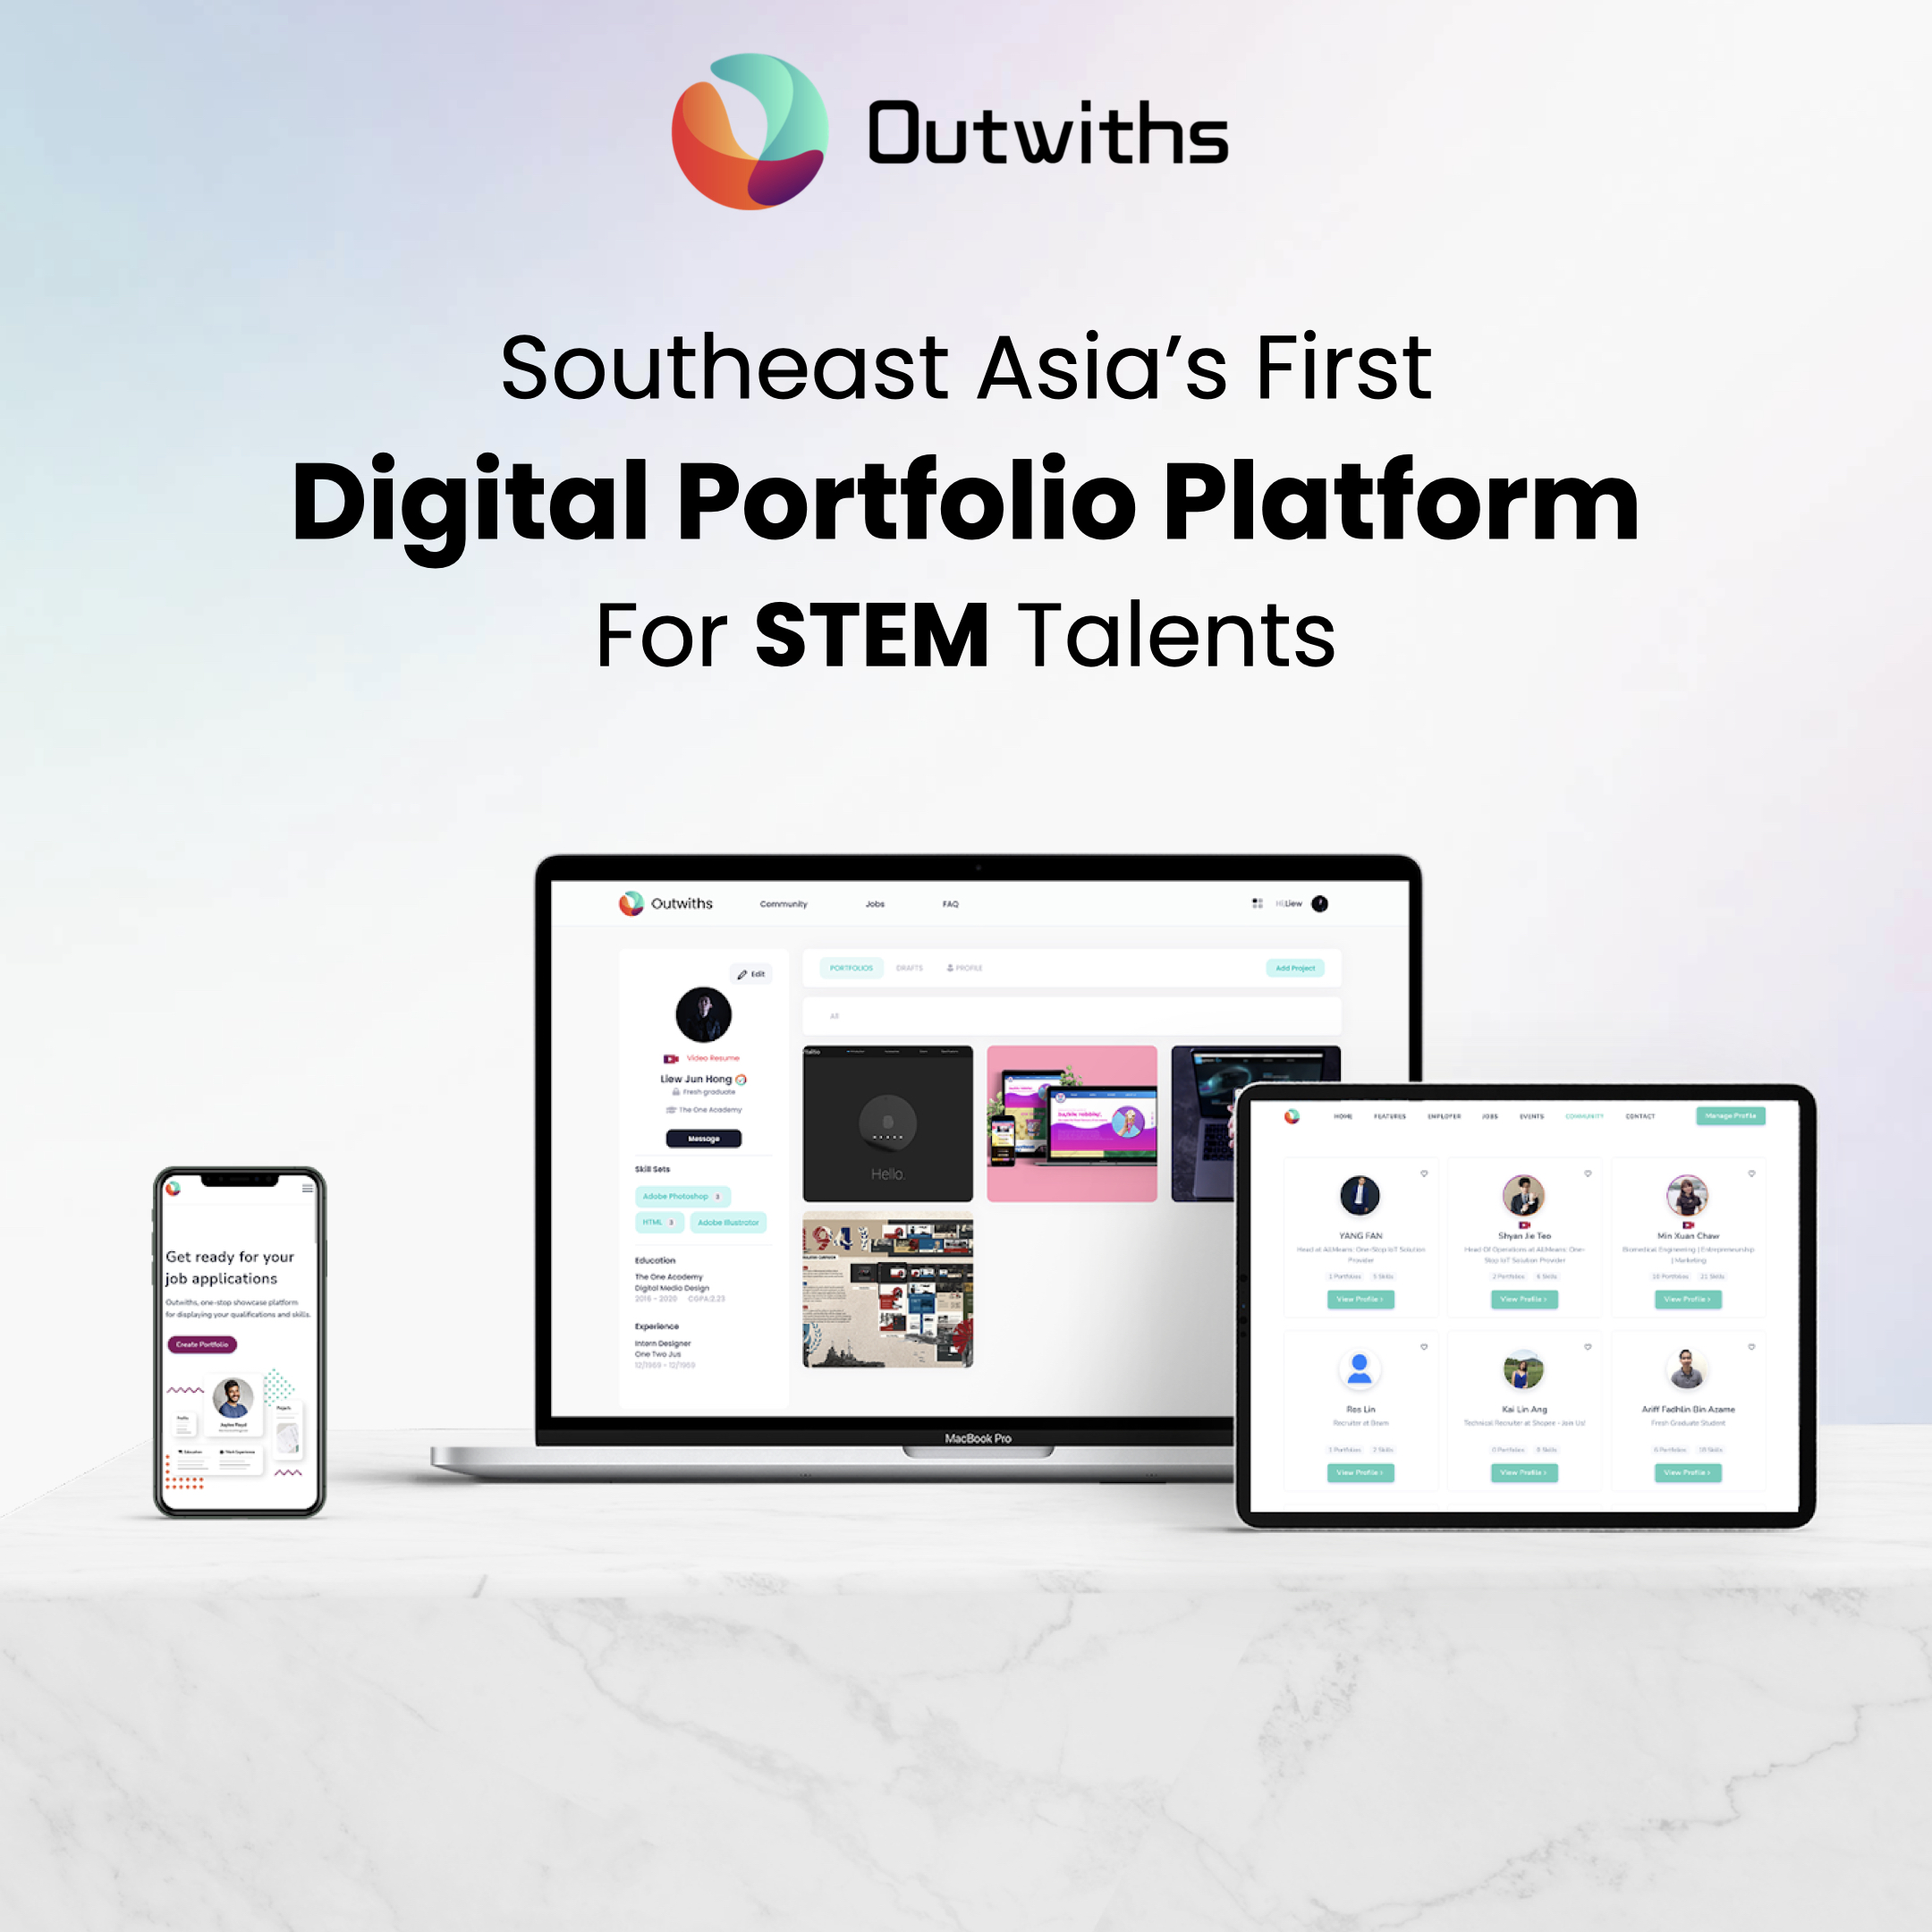 First Digital Portfolio Platform for STEM Talents in Southeast Asia